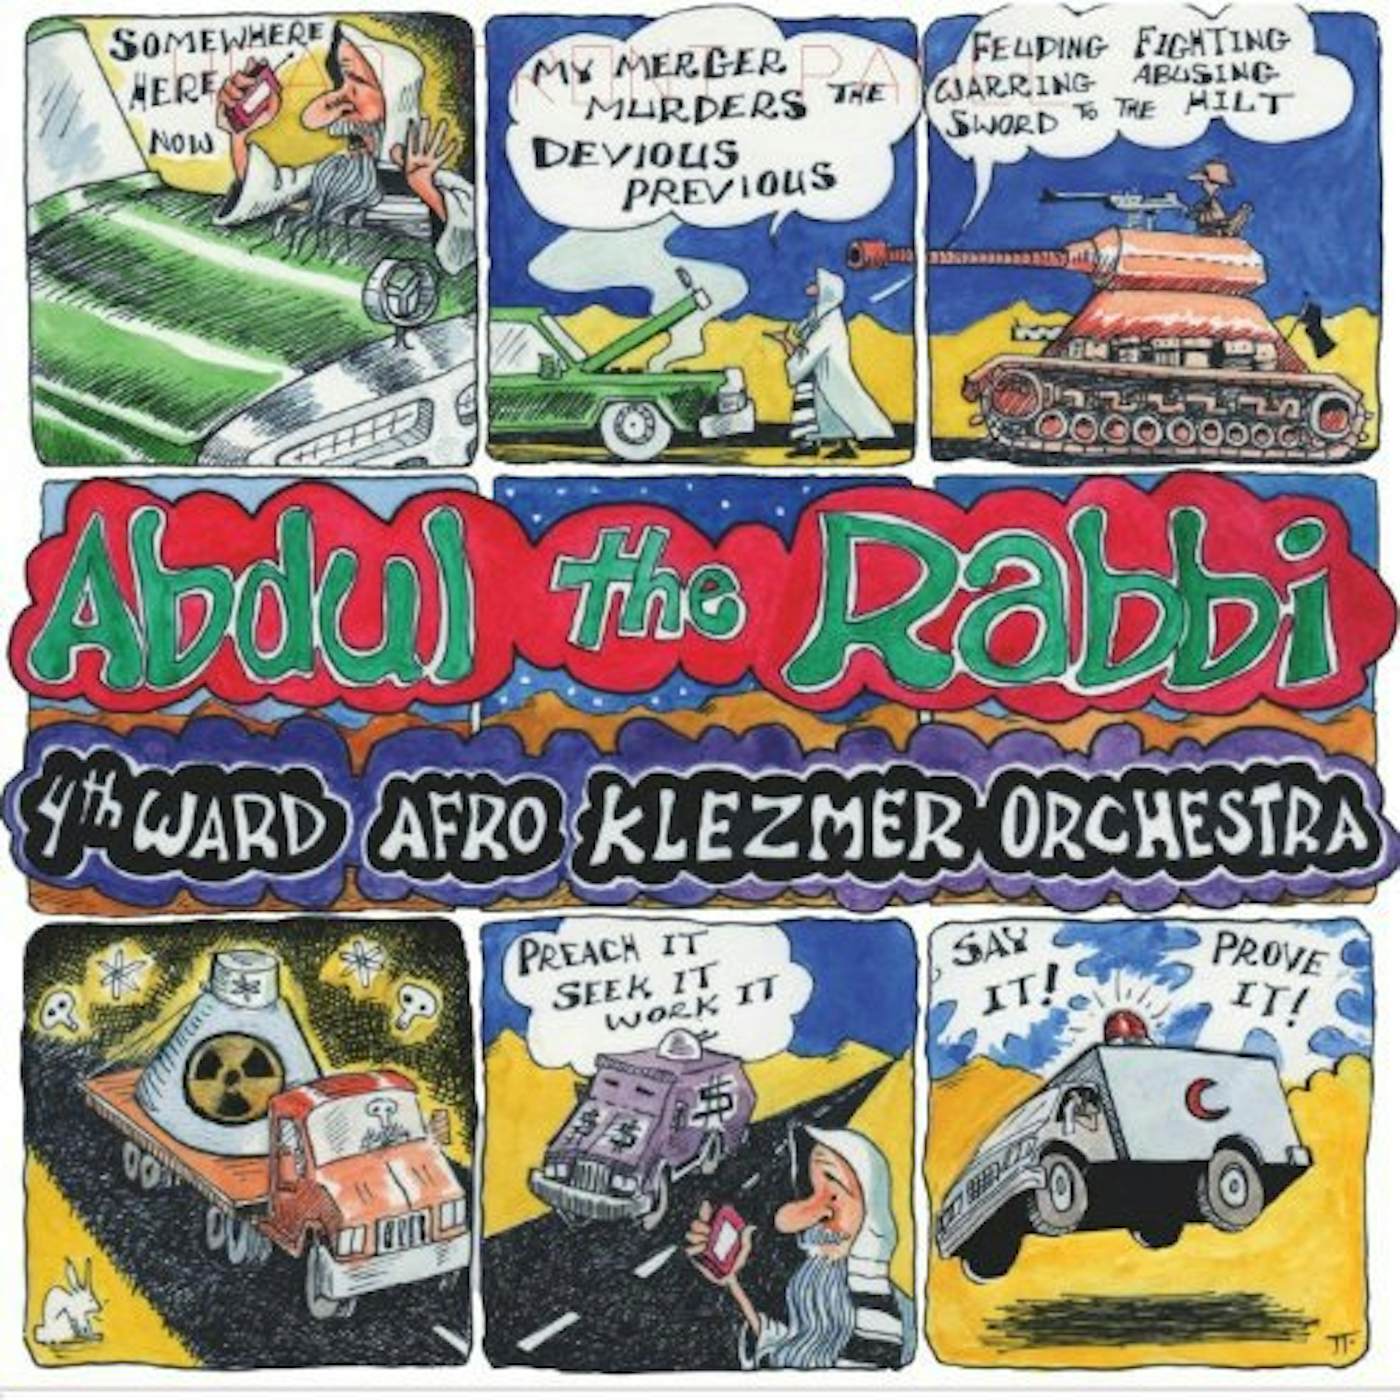 4th Ward Afro-Klezmer Orchestra ABDUL THE RABBI Vinyl Record